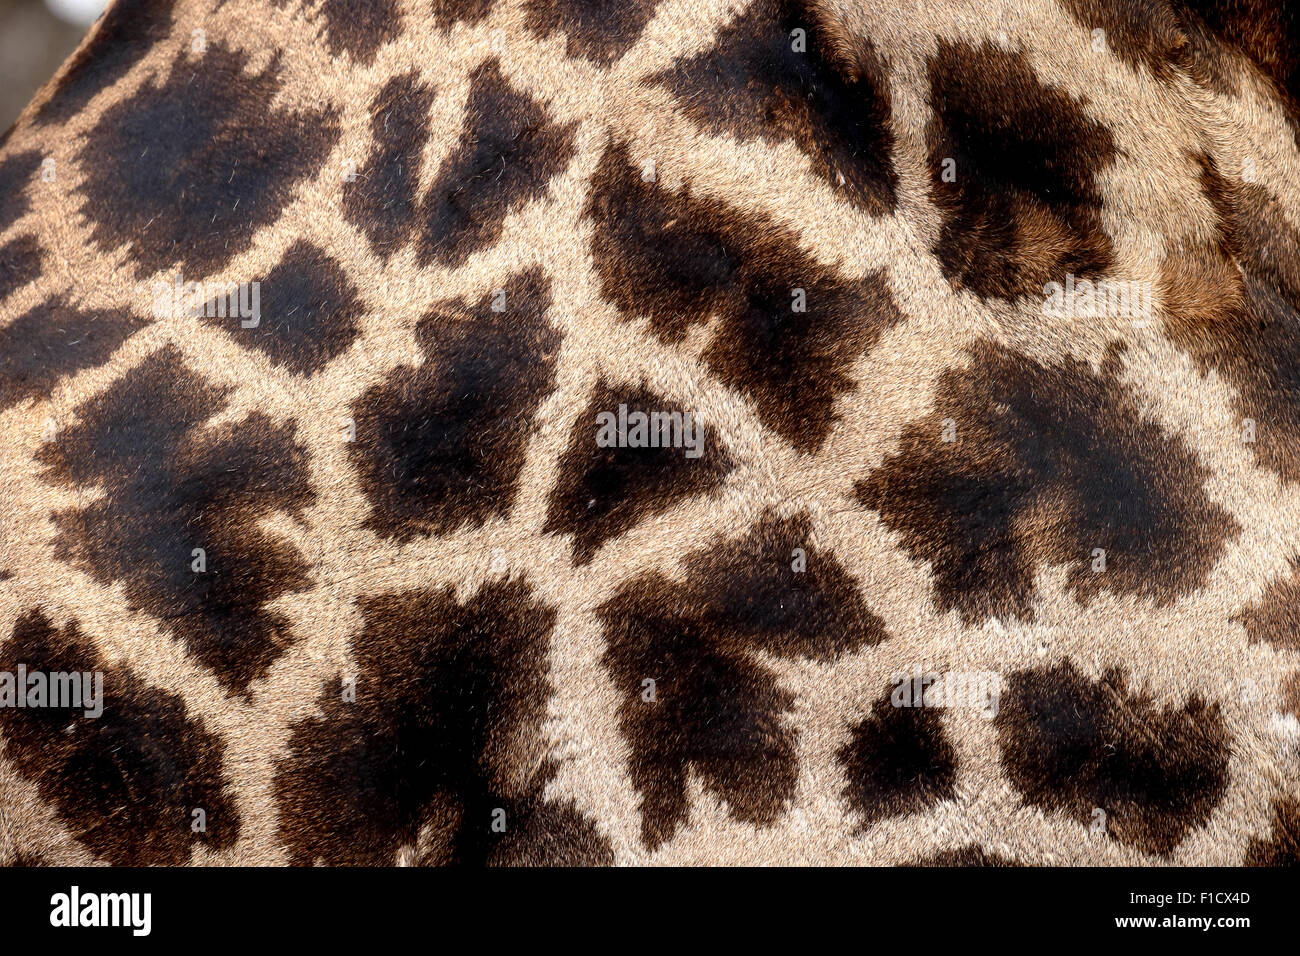 Giraffe, Giraffa camelopardalis, single mammal coat pattern, South Africa, August 2015 Stock Photo